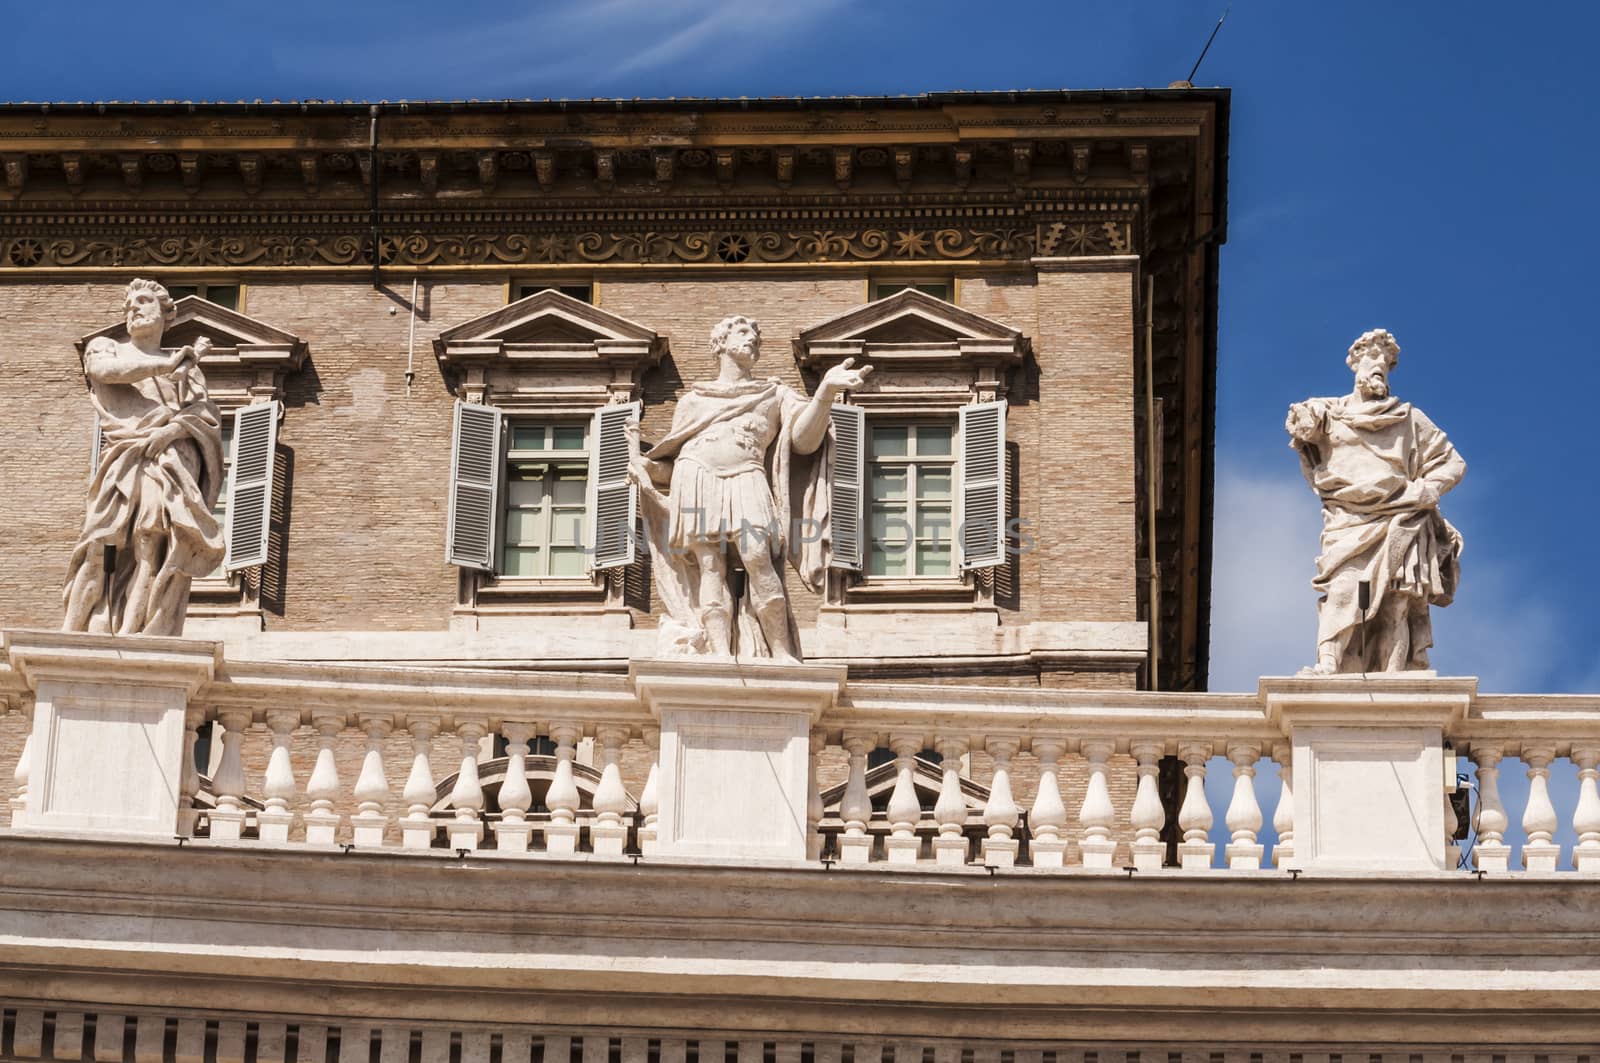 Saint statues in Vatican City by edella